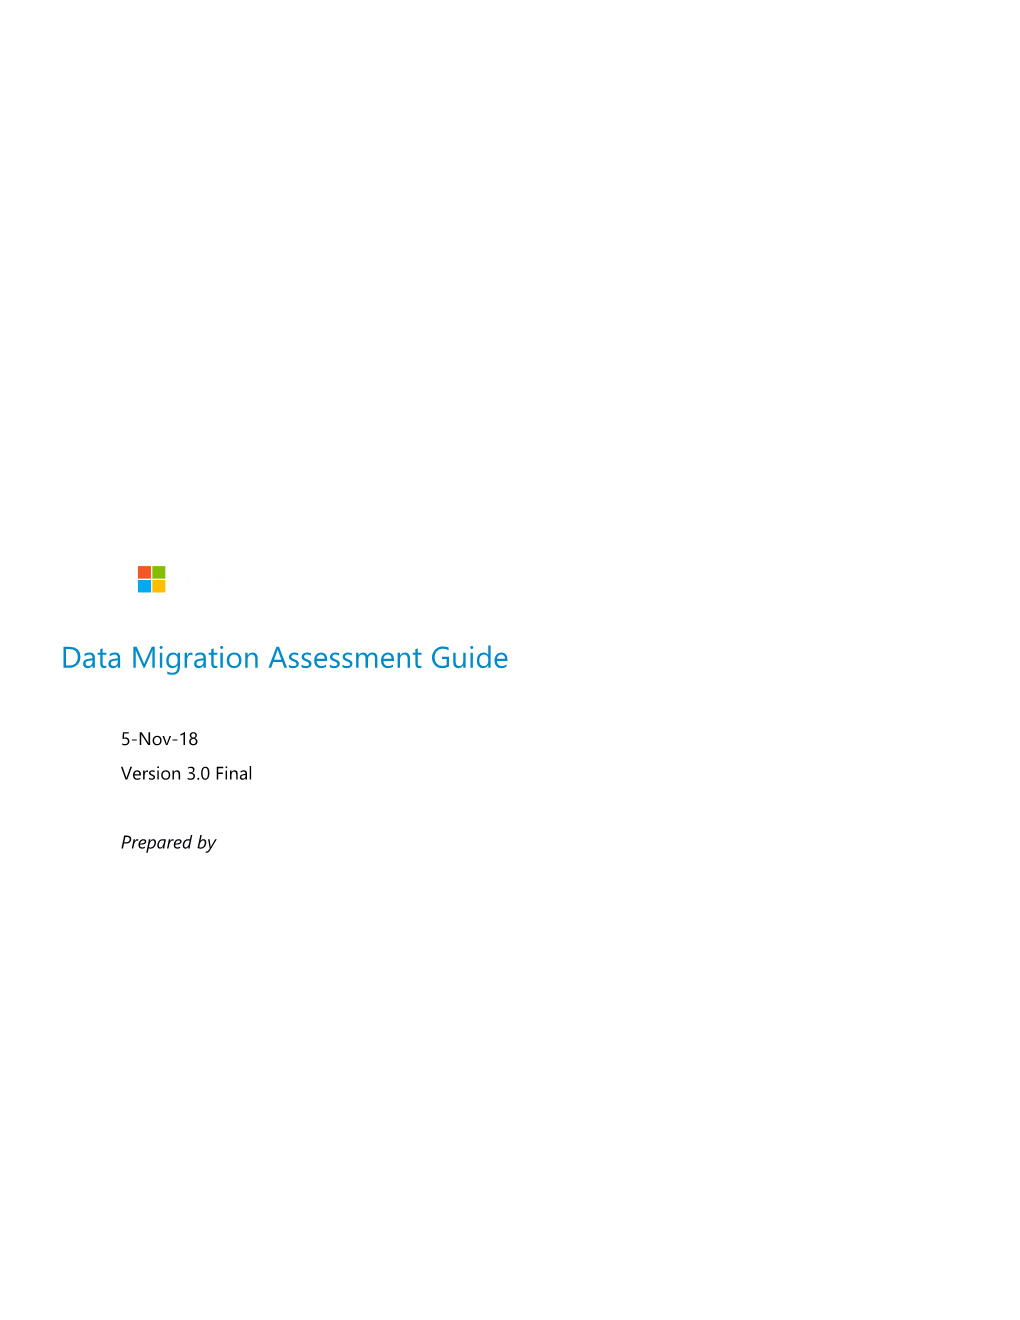 Data Migration Assessment Jump Start